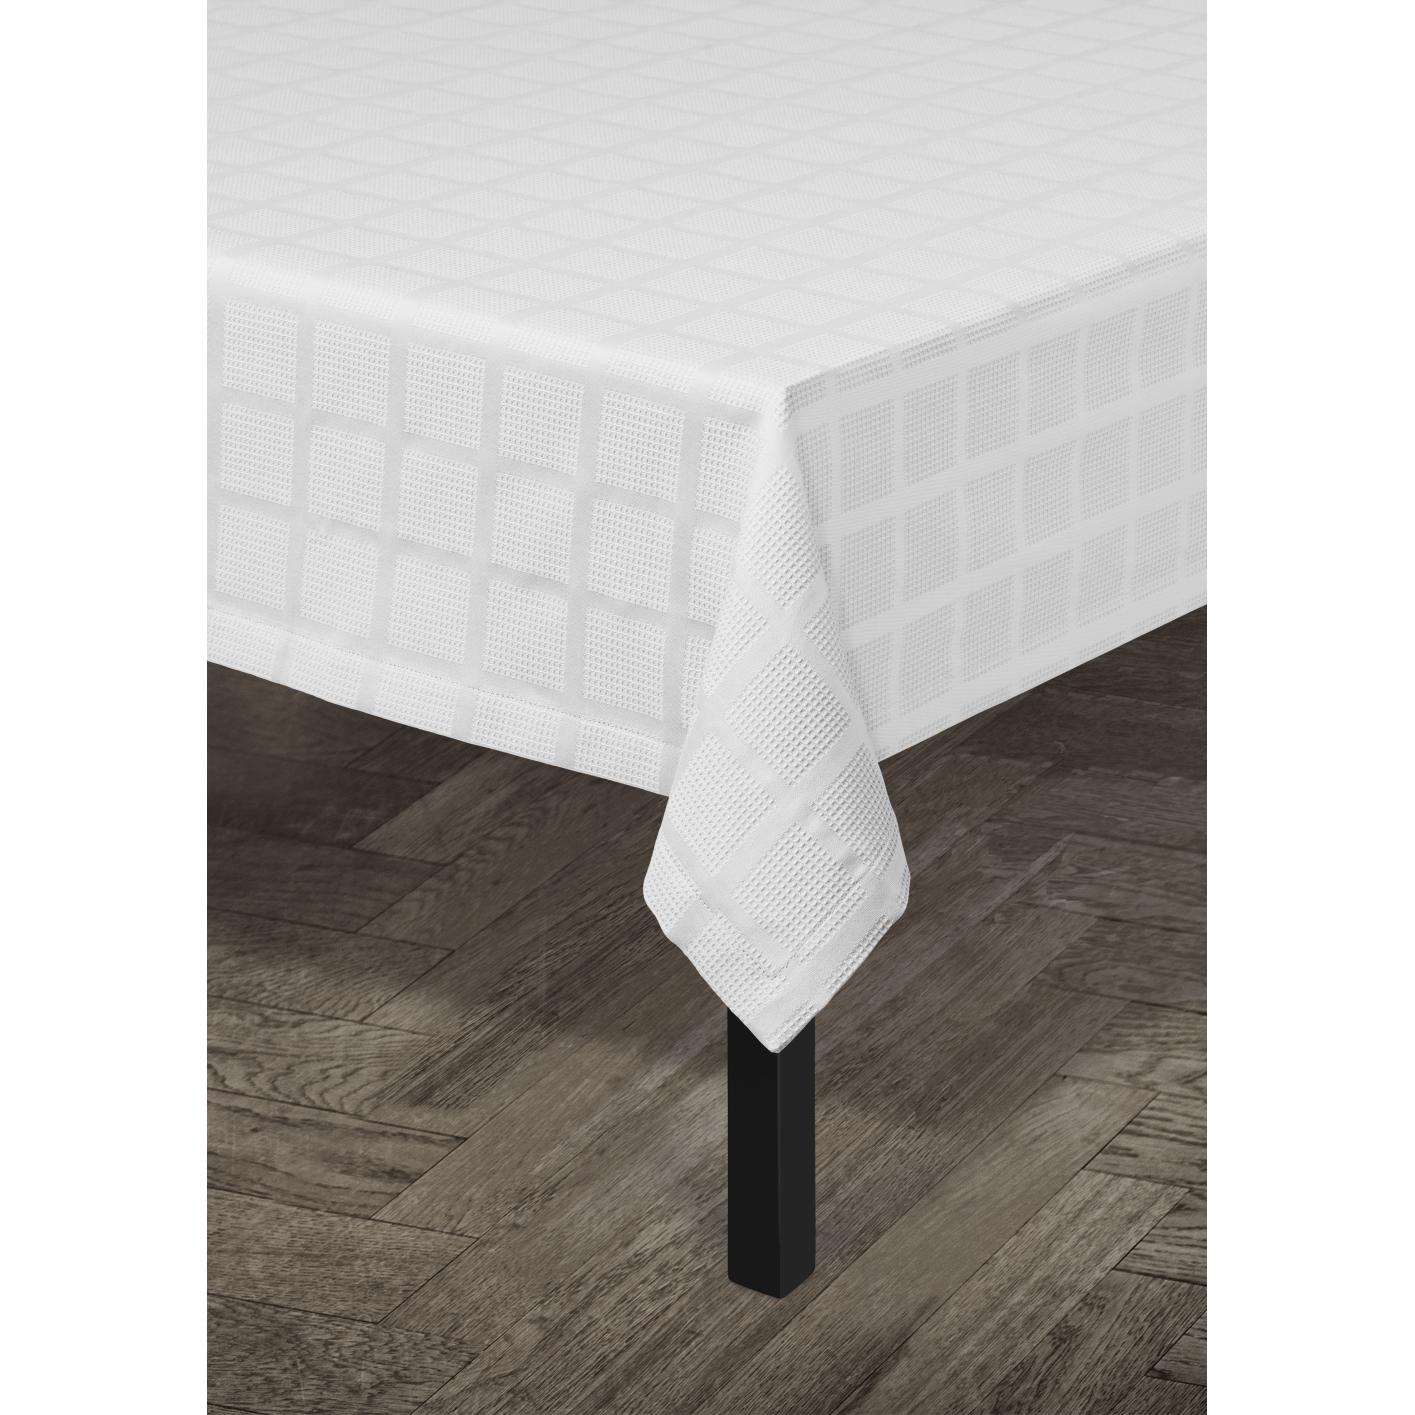 Juna Brick Damascus Tablecloth White, 150x220 Cm